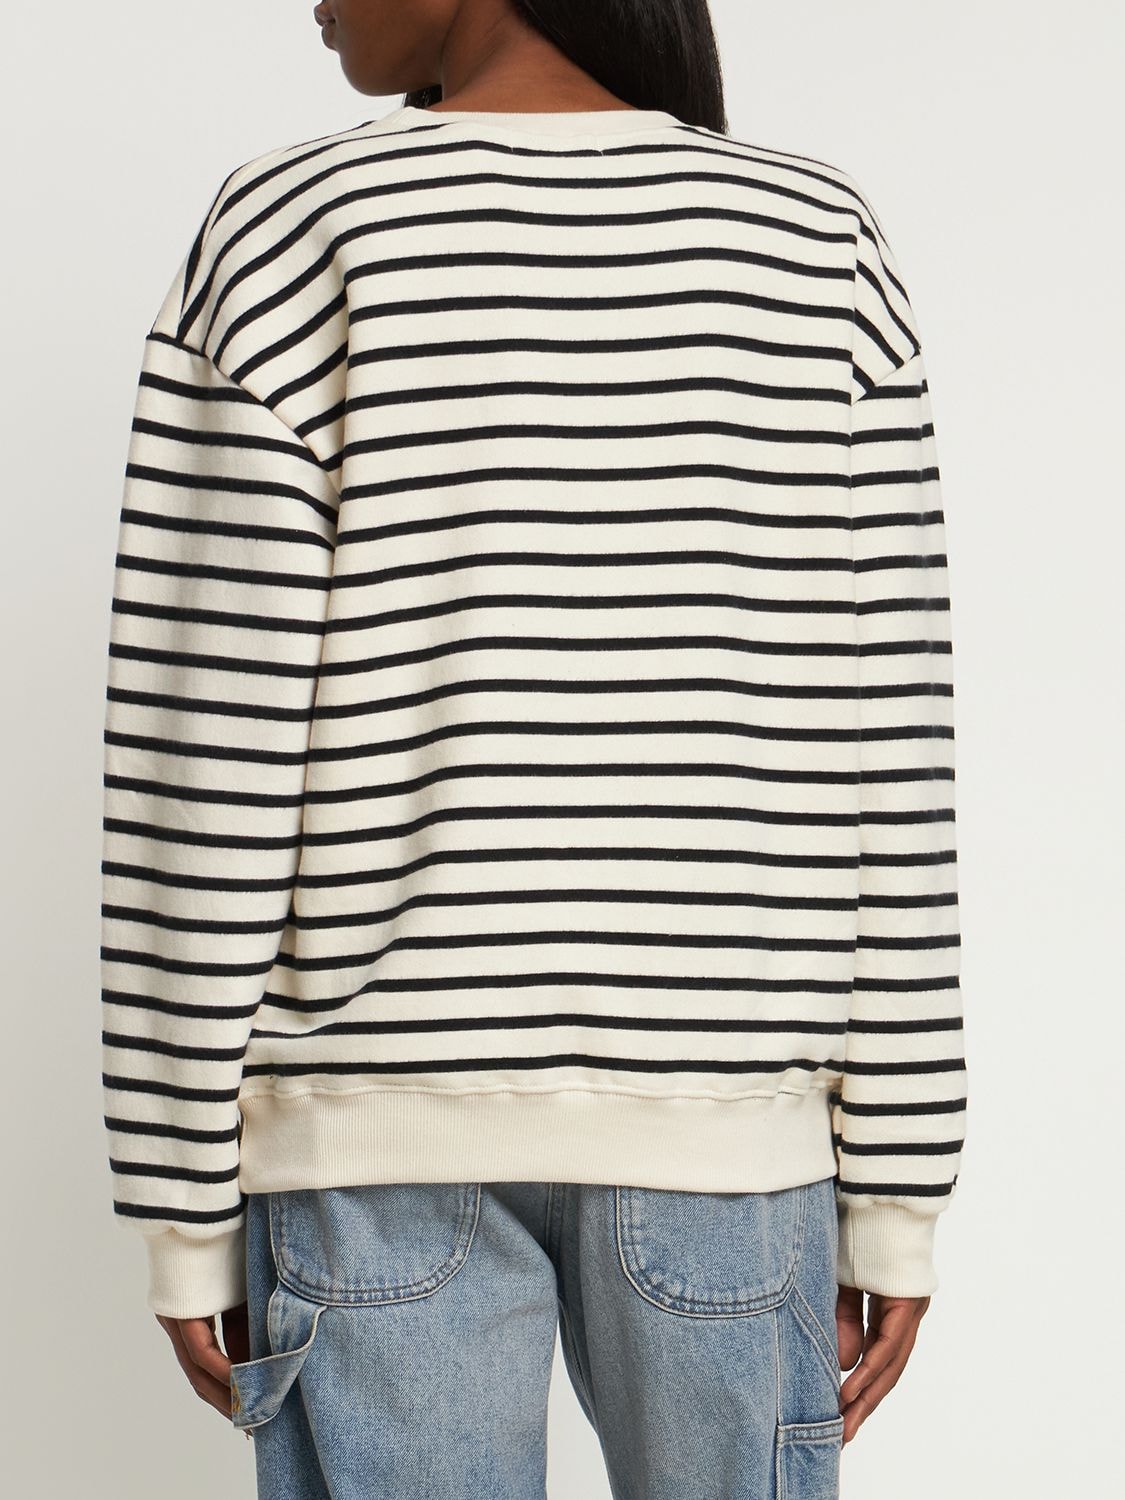 Frankie Shop Striped Sweatshirt